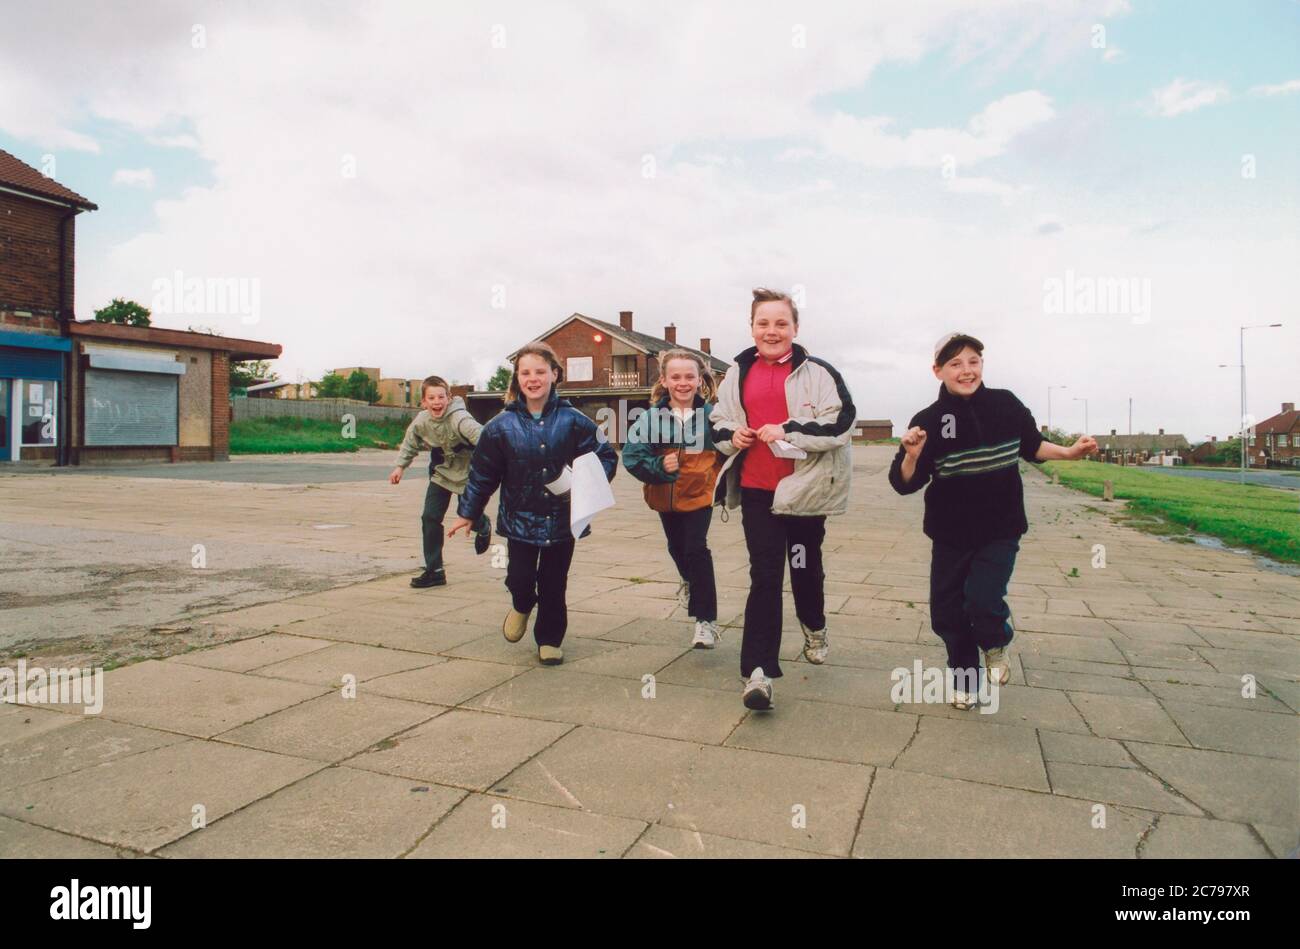 Children playing near shops Bradford council housing estate UK Stock Photo